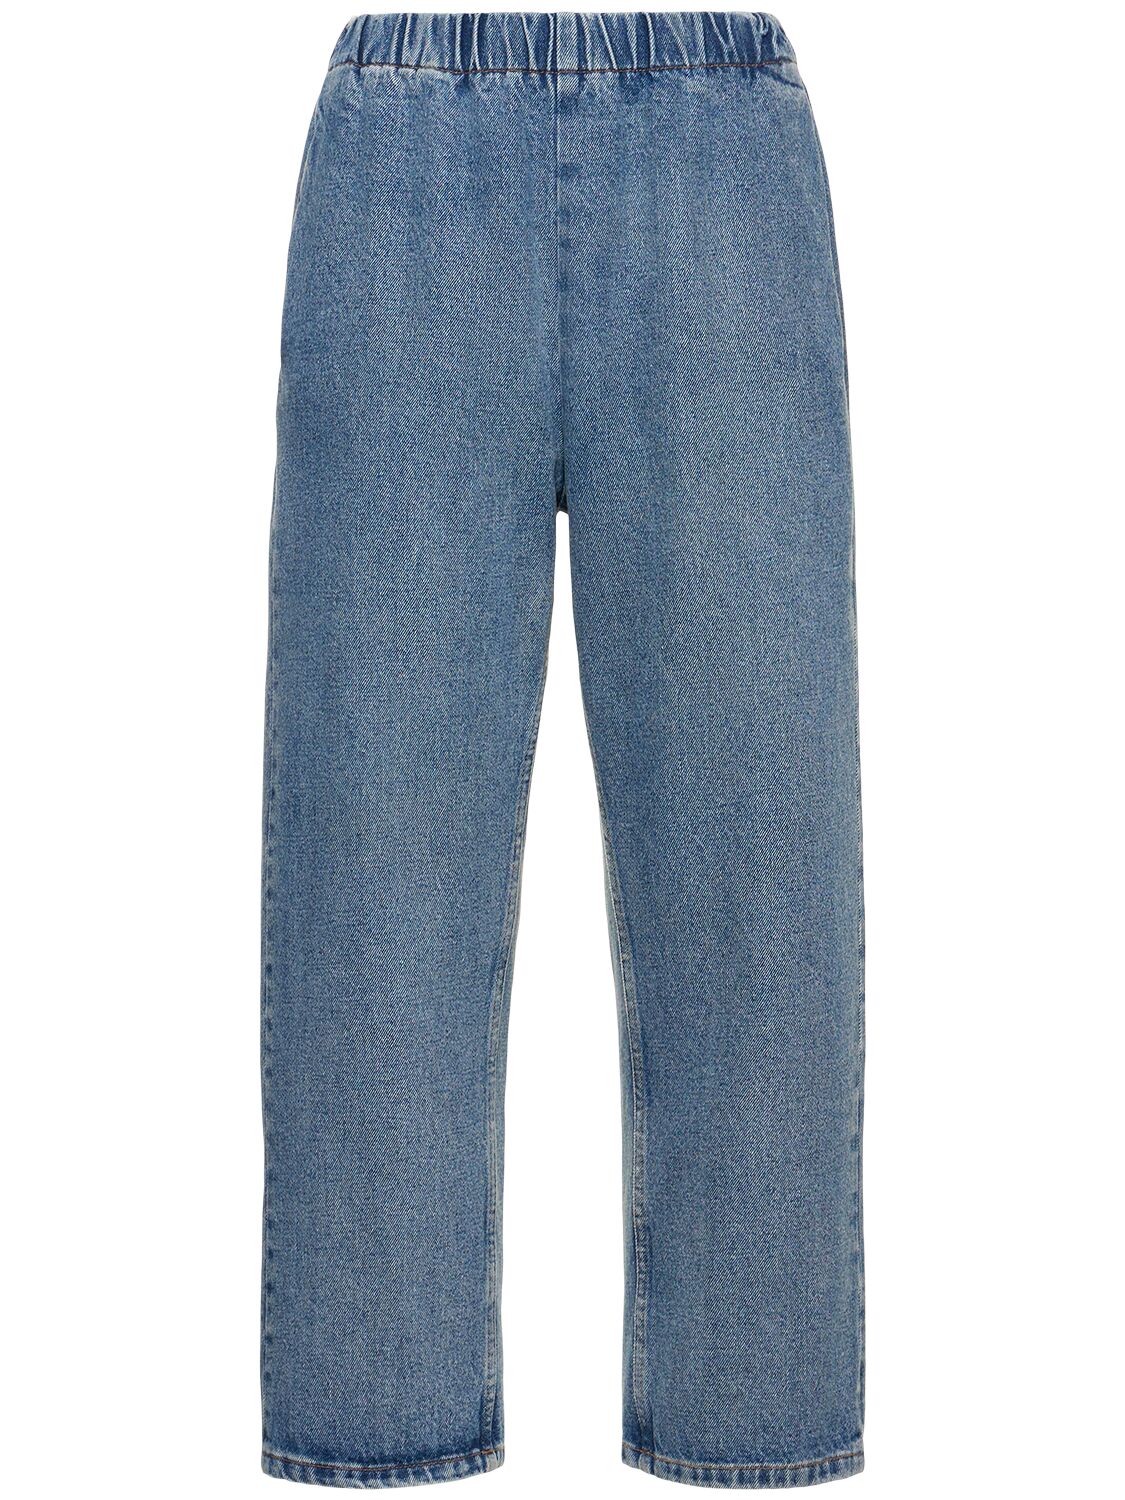 Elastic Waistband Cotton Denim Jeans